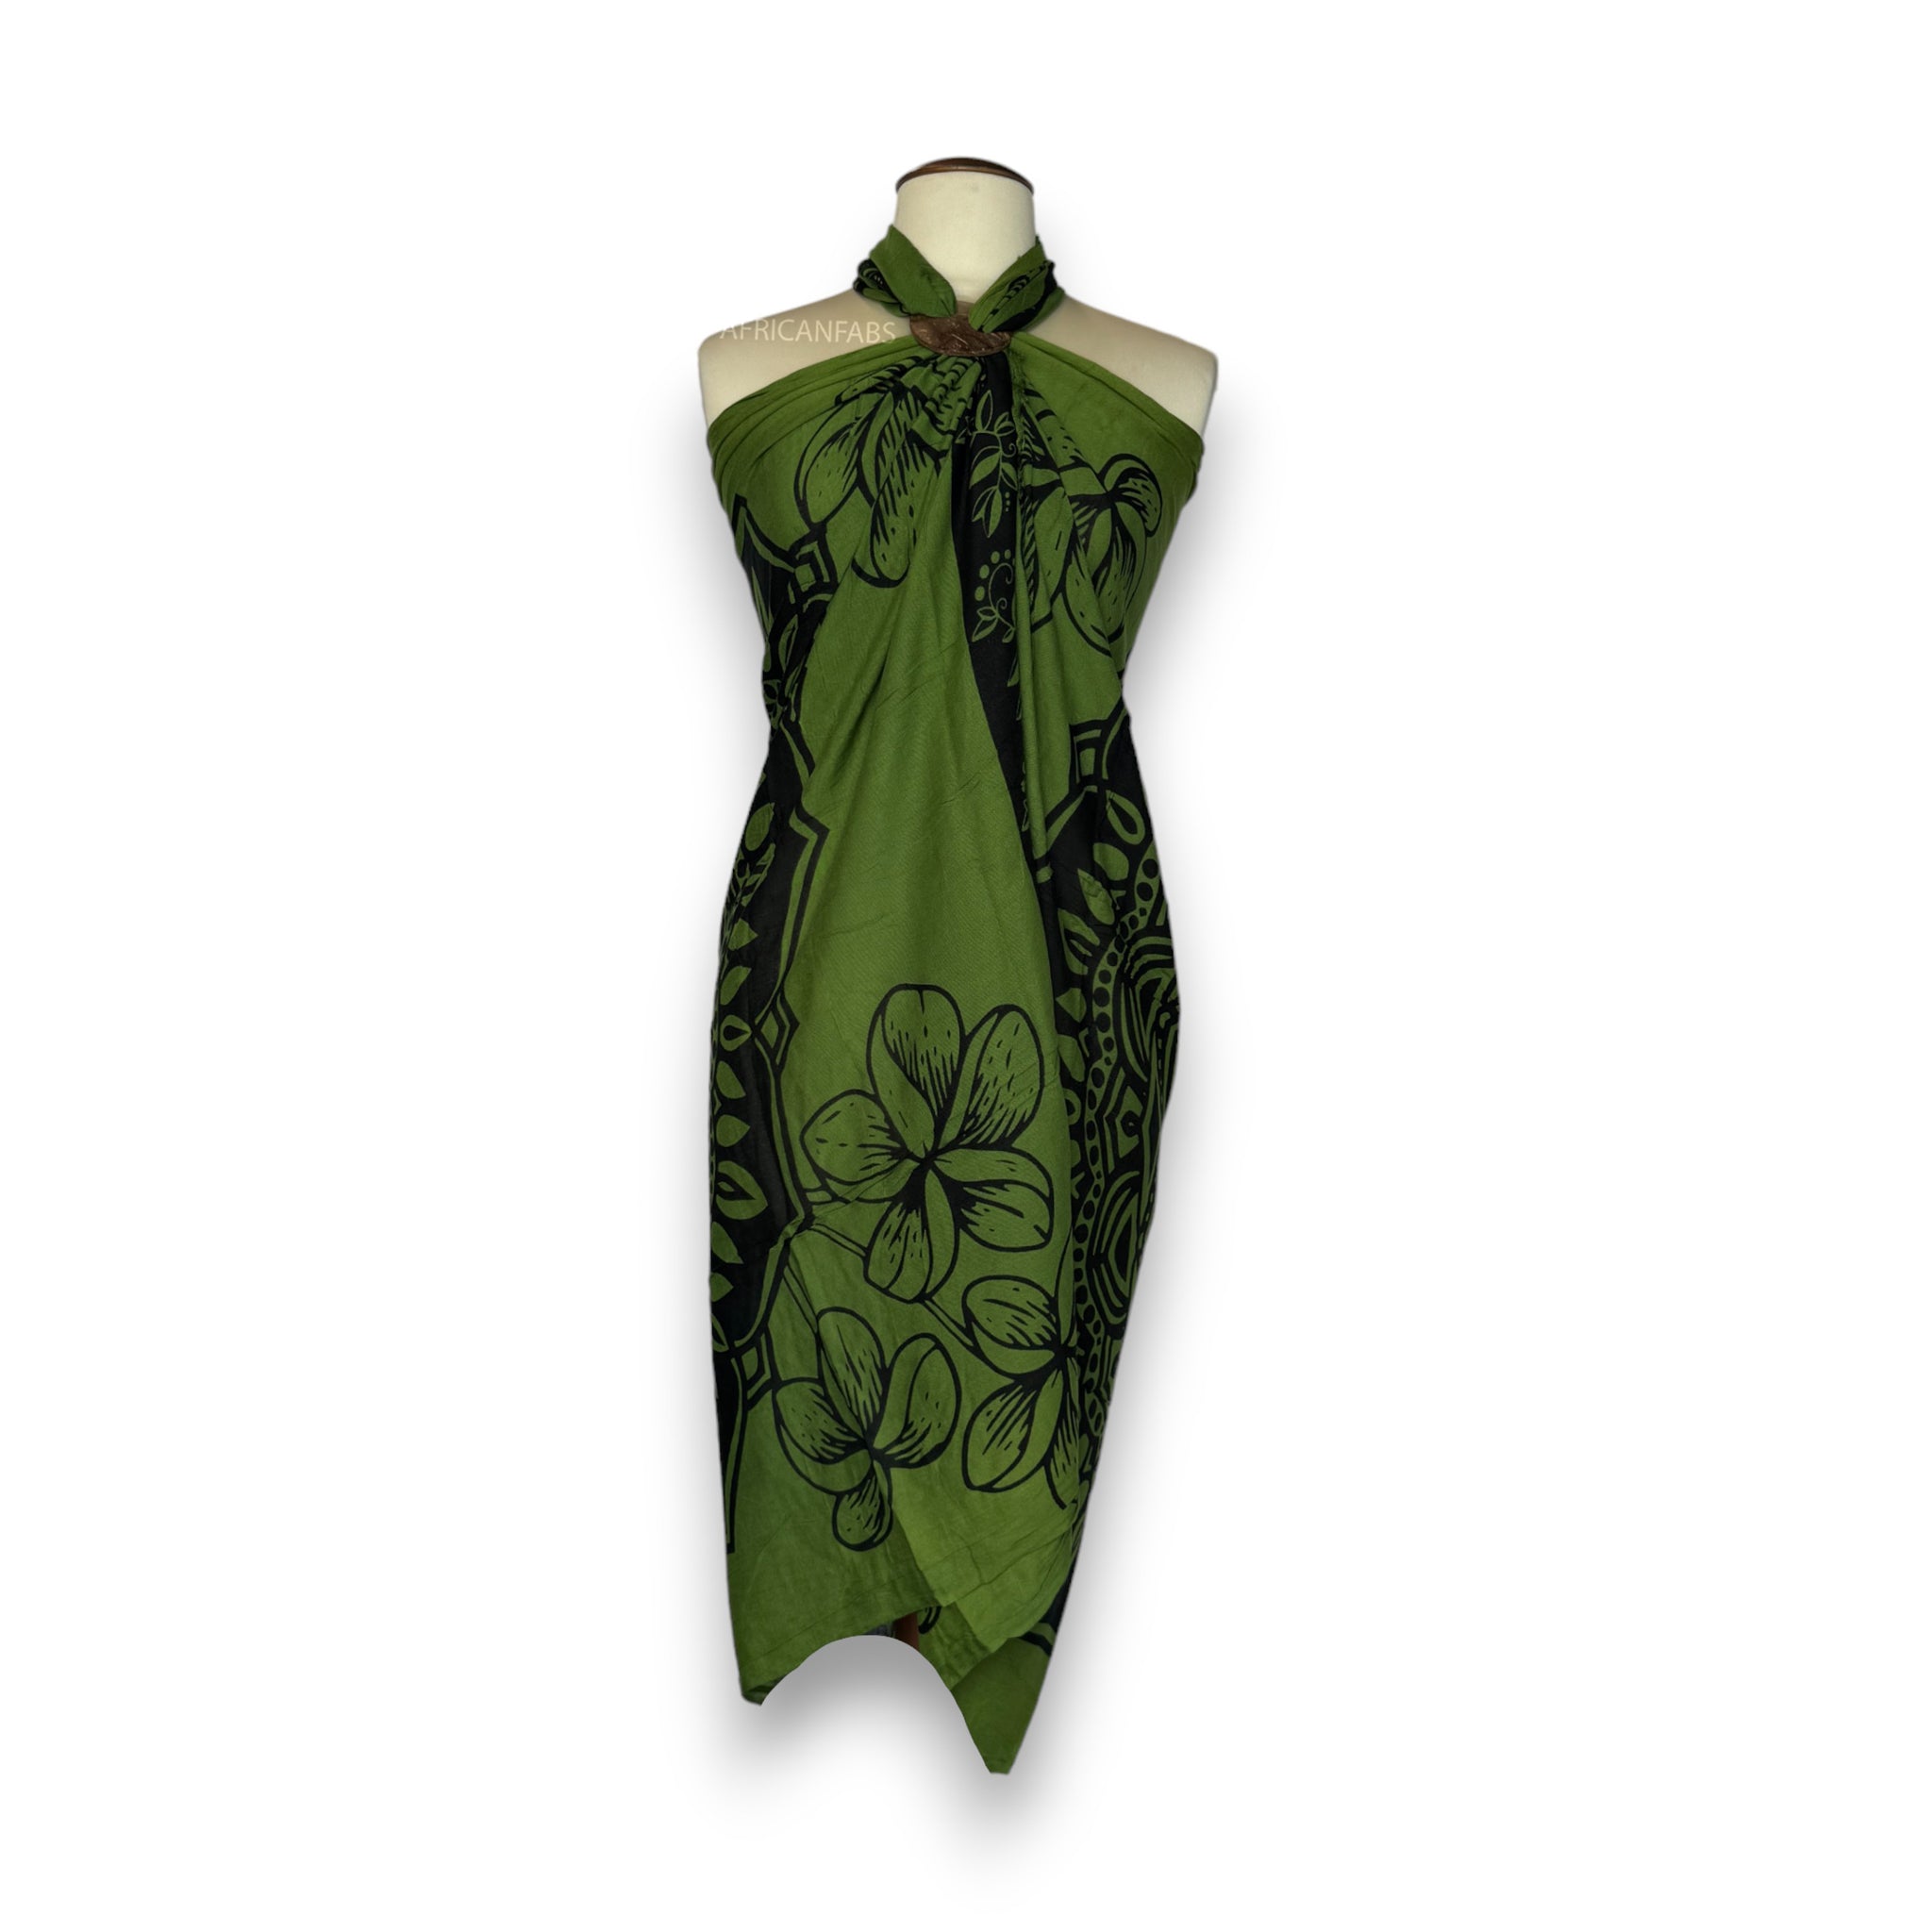 Sarong / Pareo - Strandbekleidung Wickeltuch - Grün / schwarzes Mandala